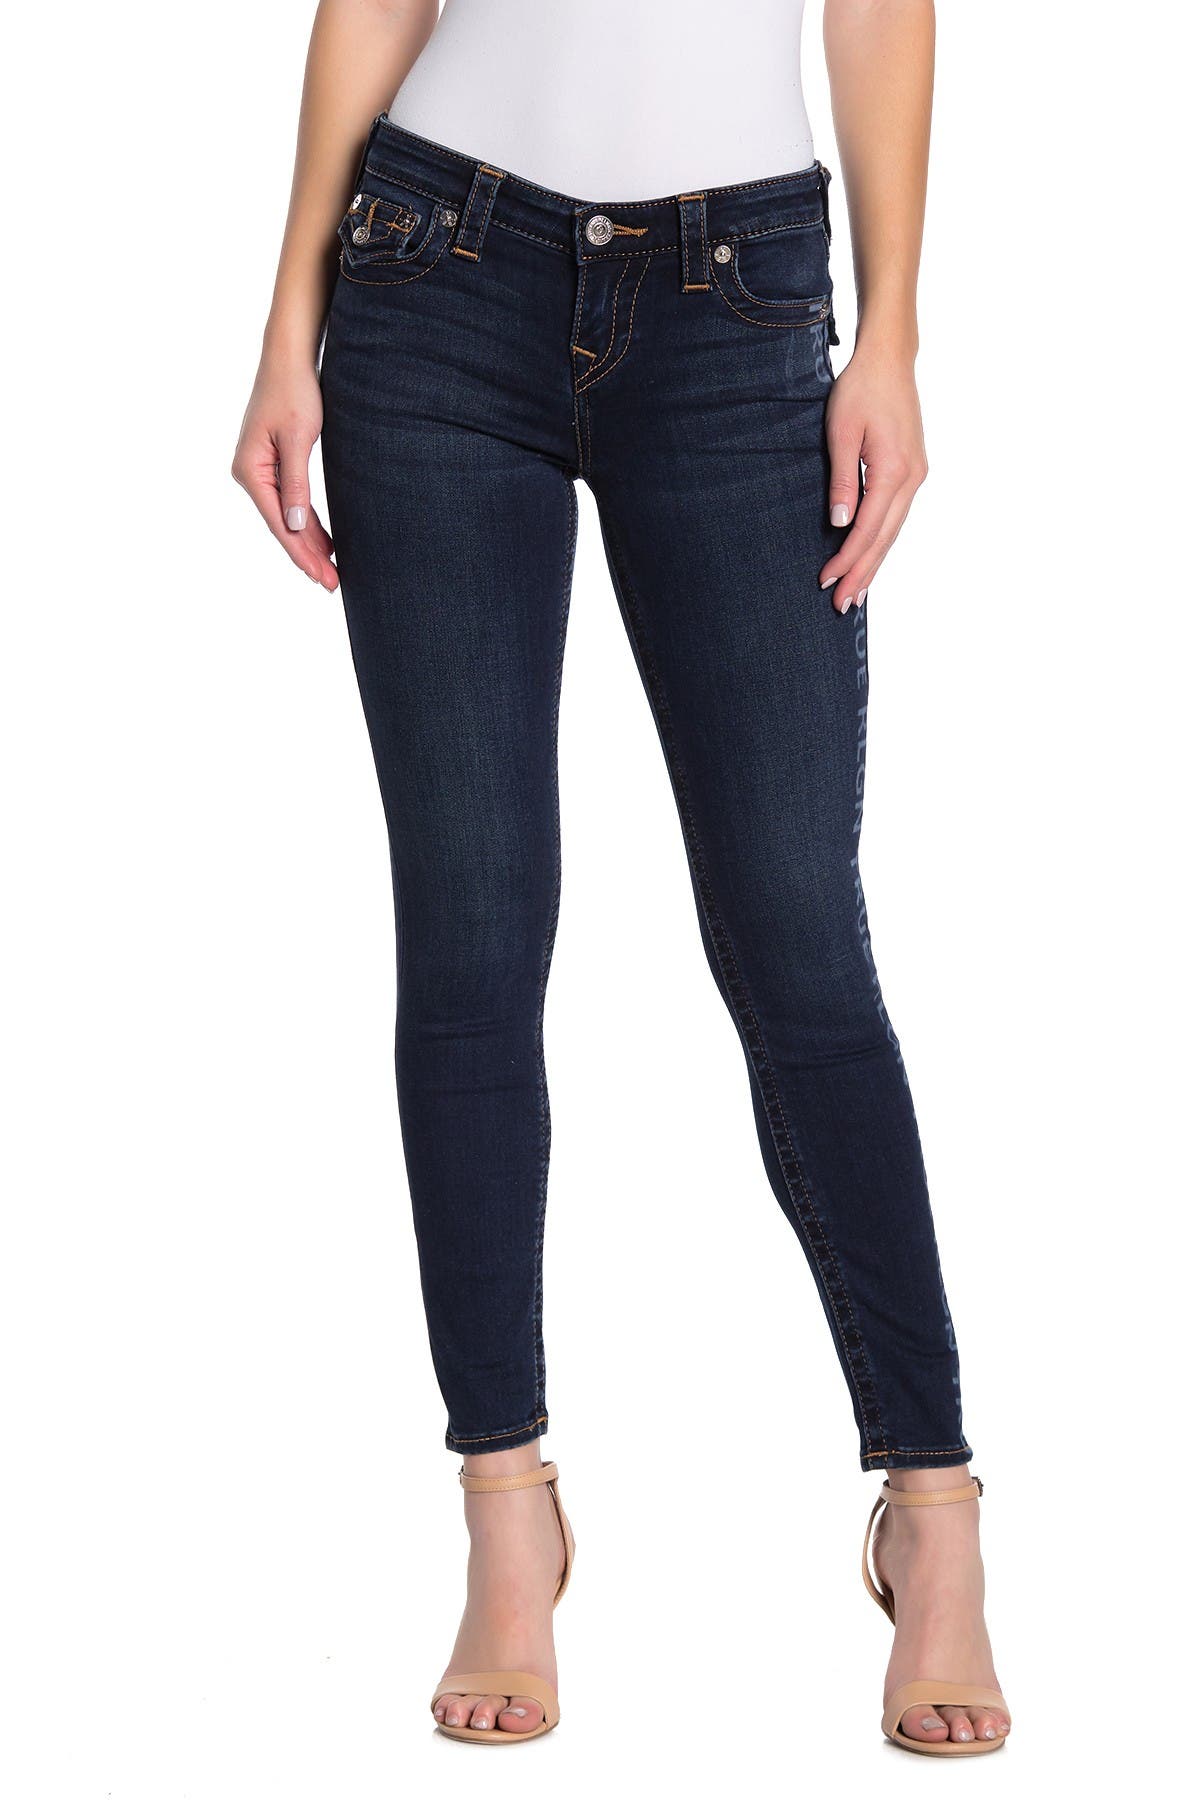 true religion jeans halle mid rise super skinny